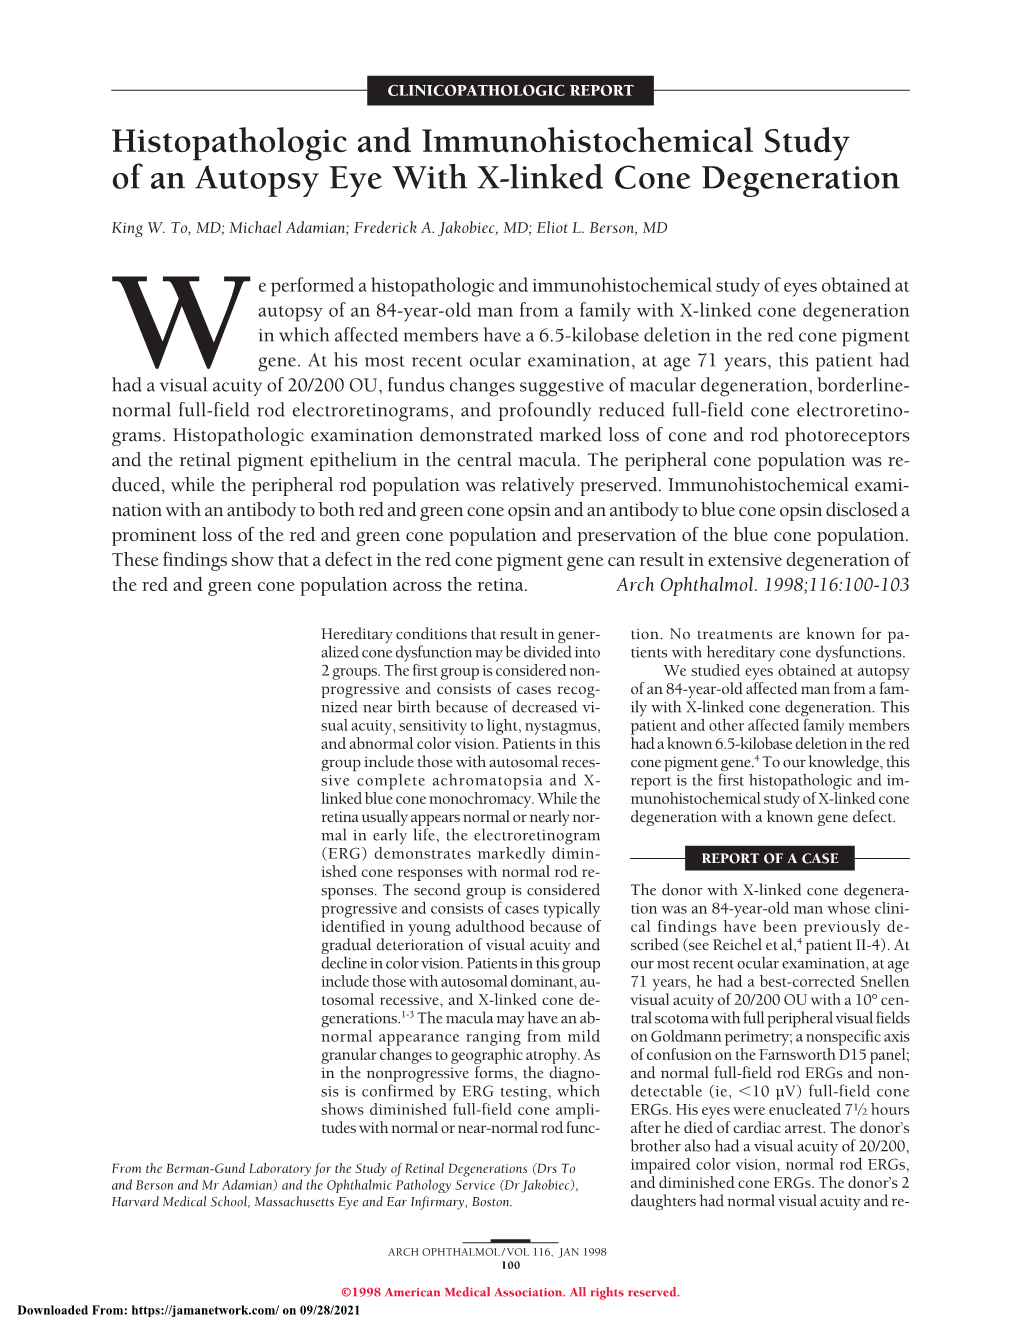 Histopathologic and Immunohistochemical Study of an Autopsy Eye with X-Linked Cone Degeneration